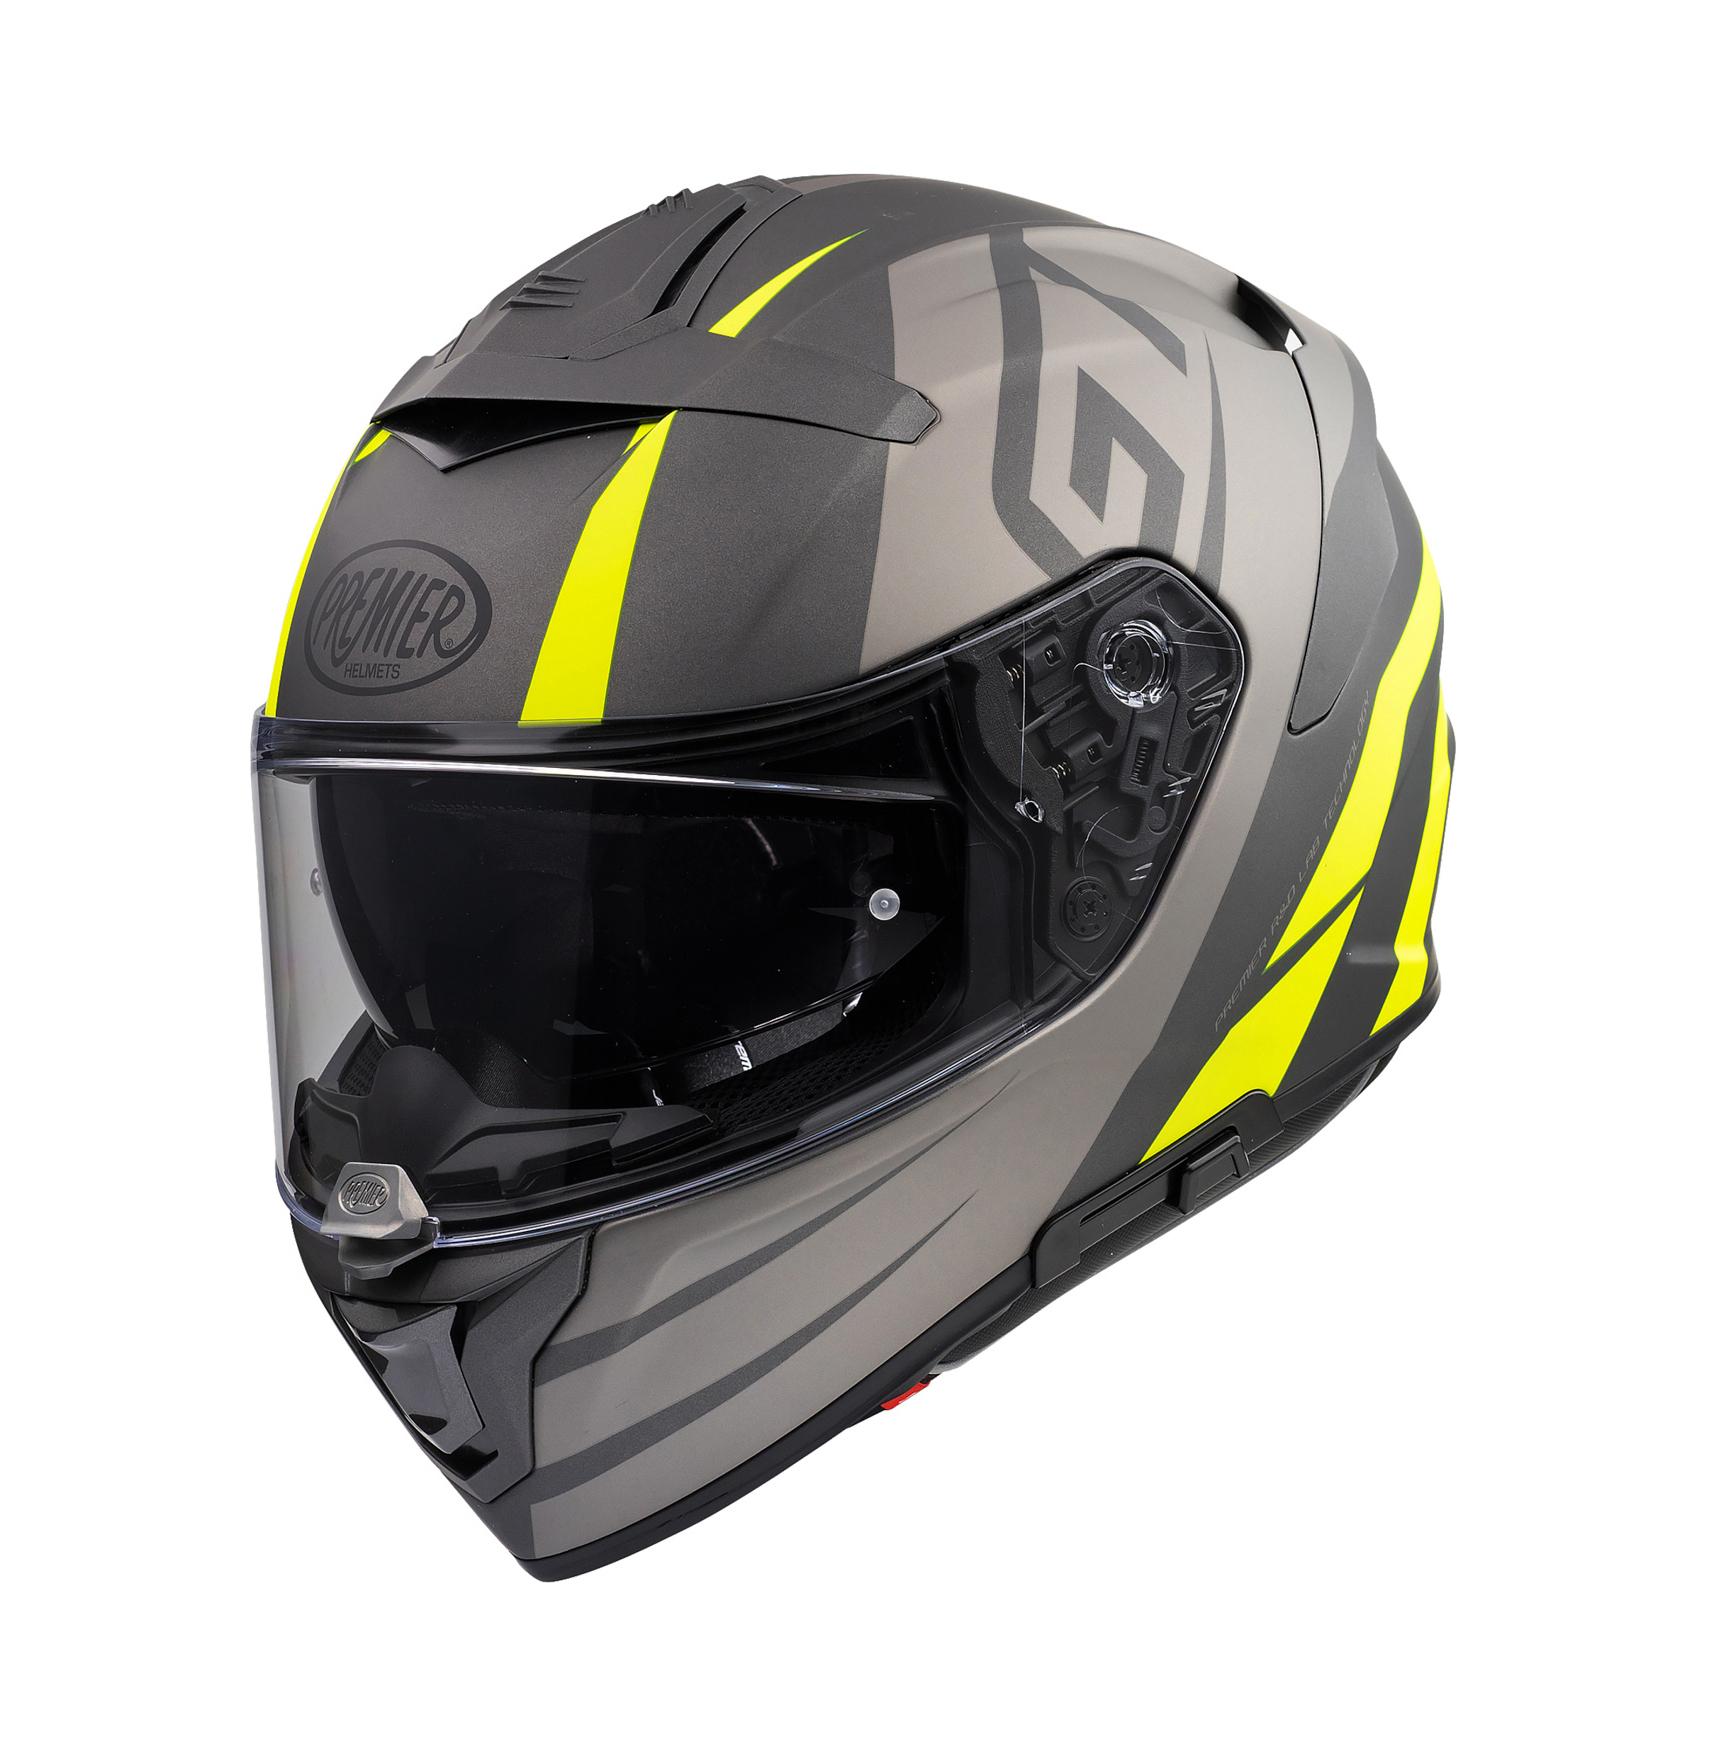 Premier Devil Gt Full Face Motorcycle Helmet - Black/Neon, M